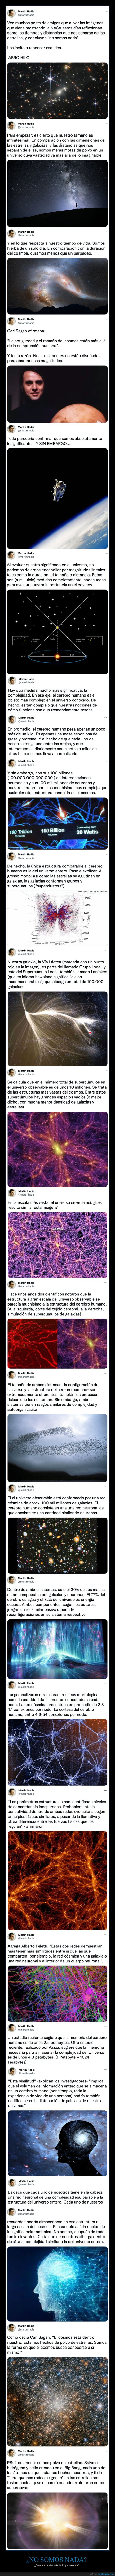 cerebro,curiosidades,universo